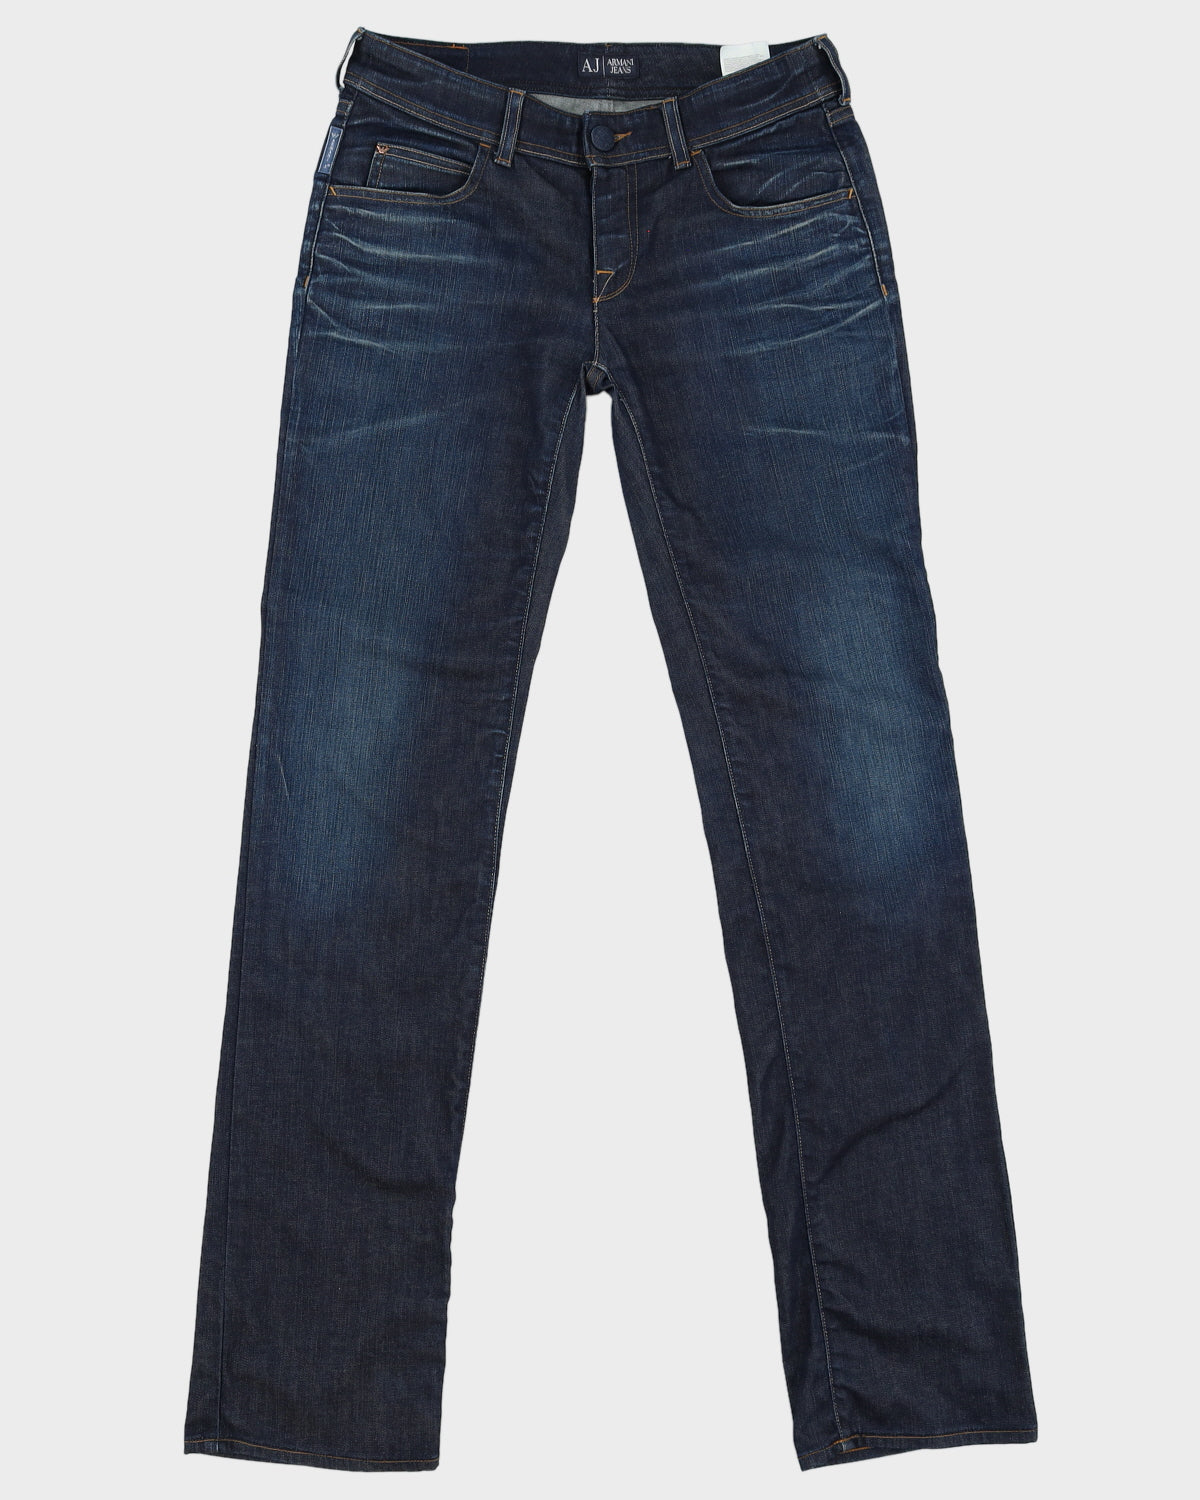 Armani Dark Wash Slim Leg Denim Jeans - W29